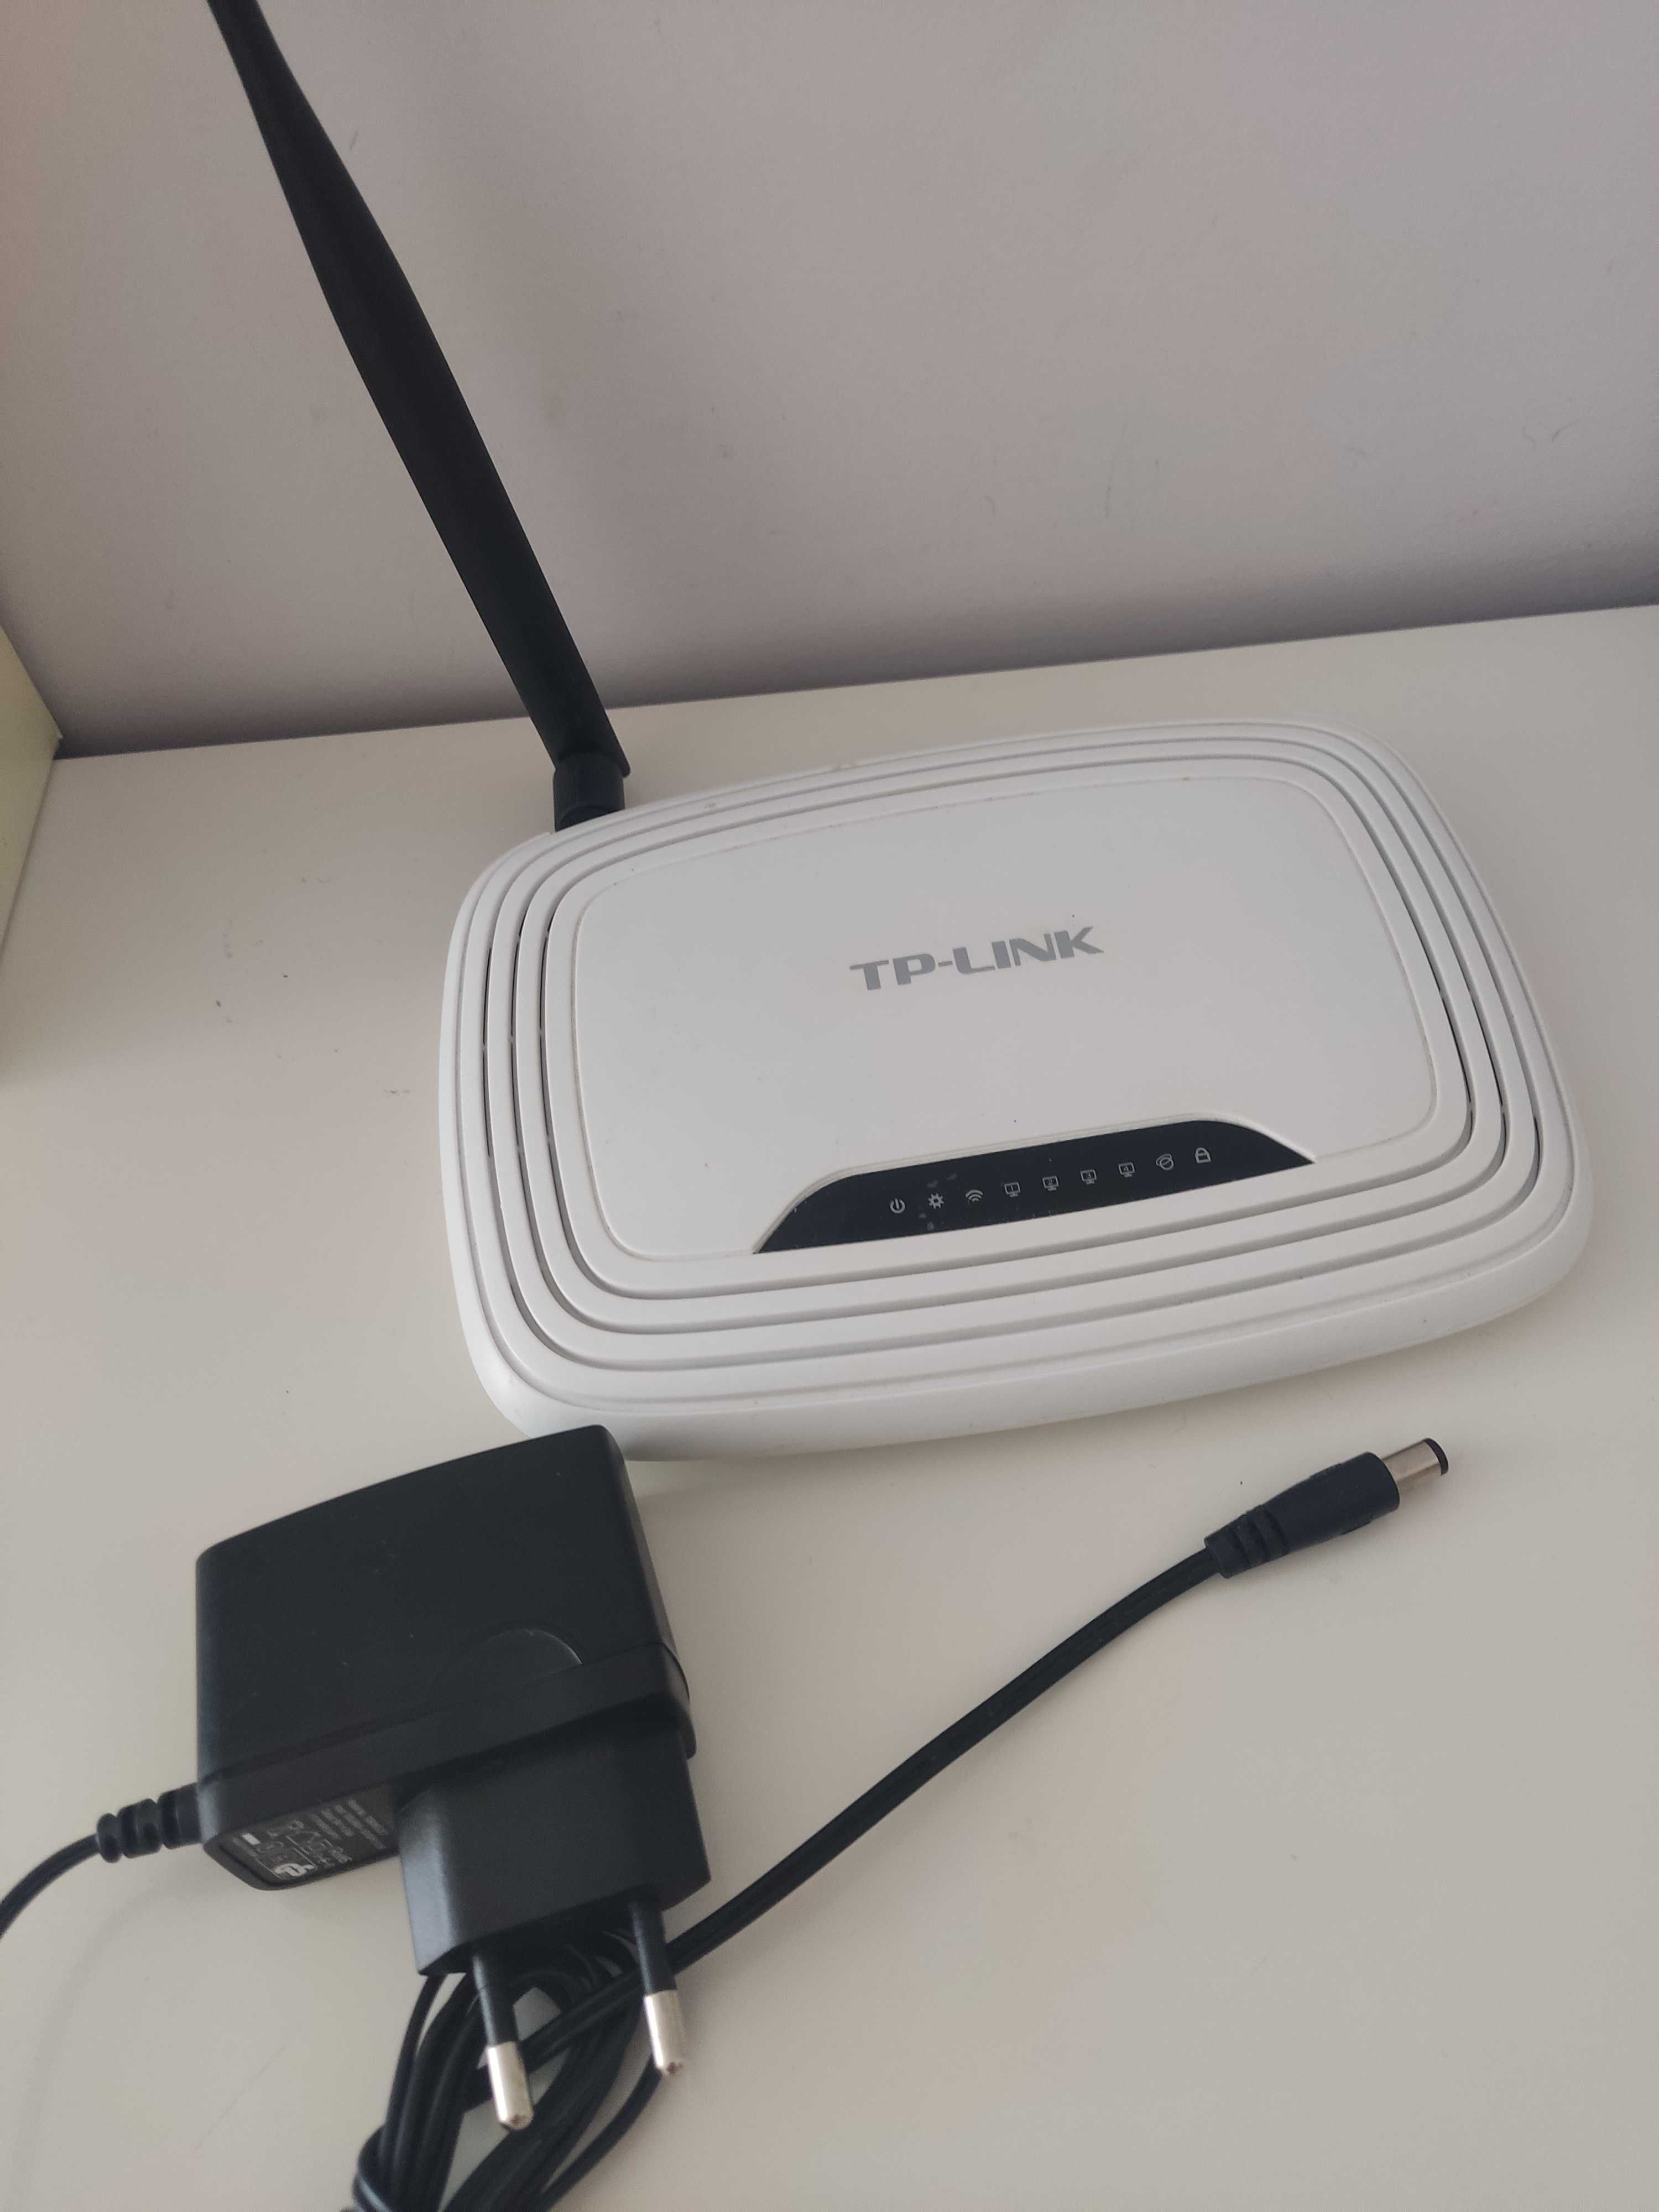 WiFi маршрутизатор Tplink TL WR741ND,
до 150 Мбит/с